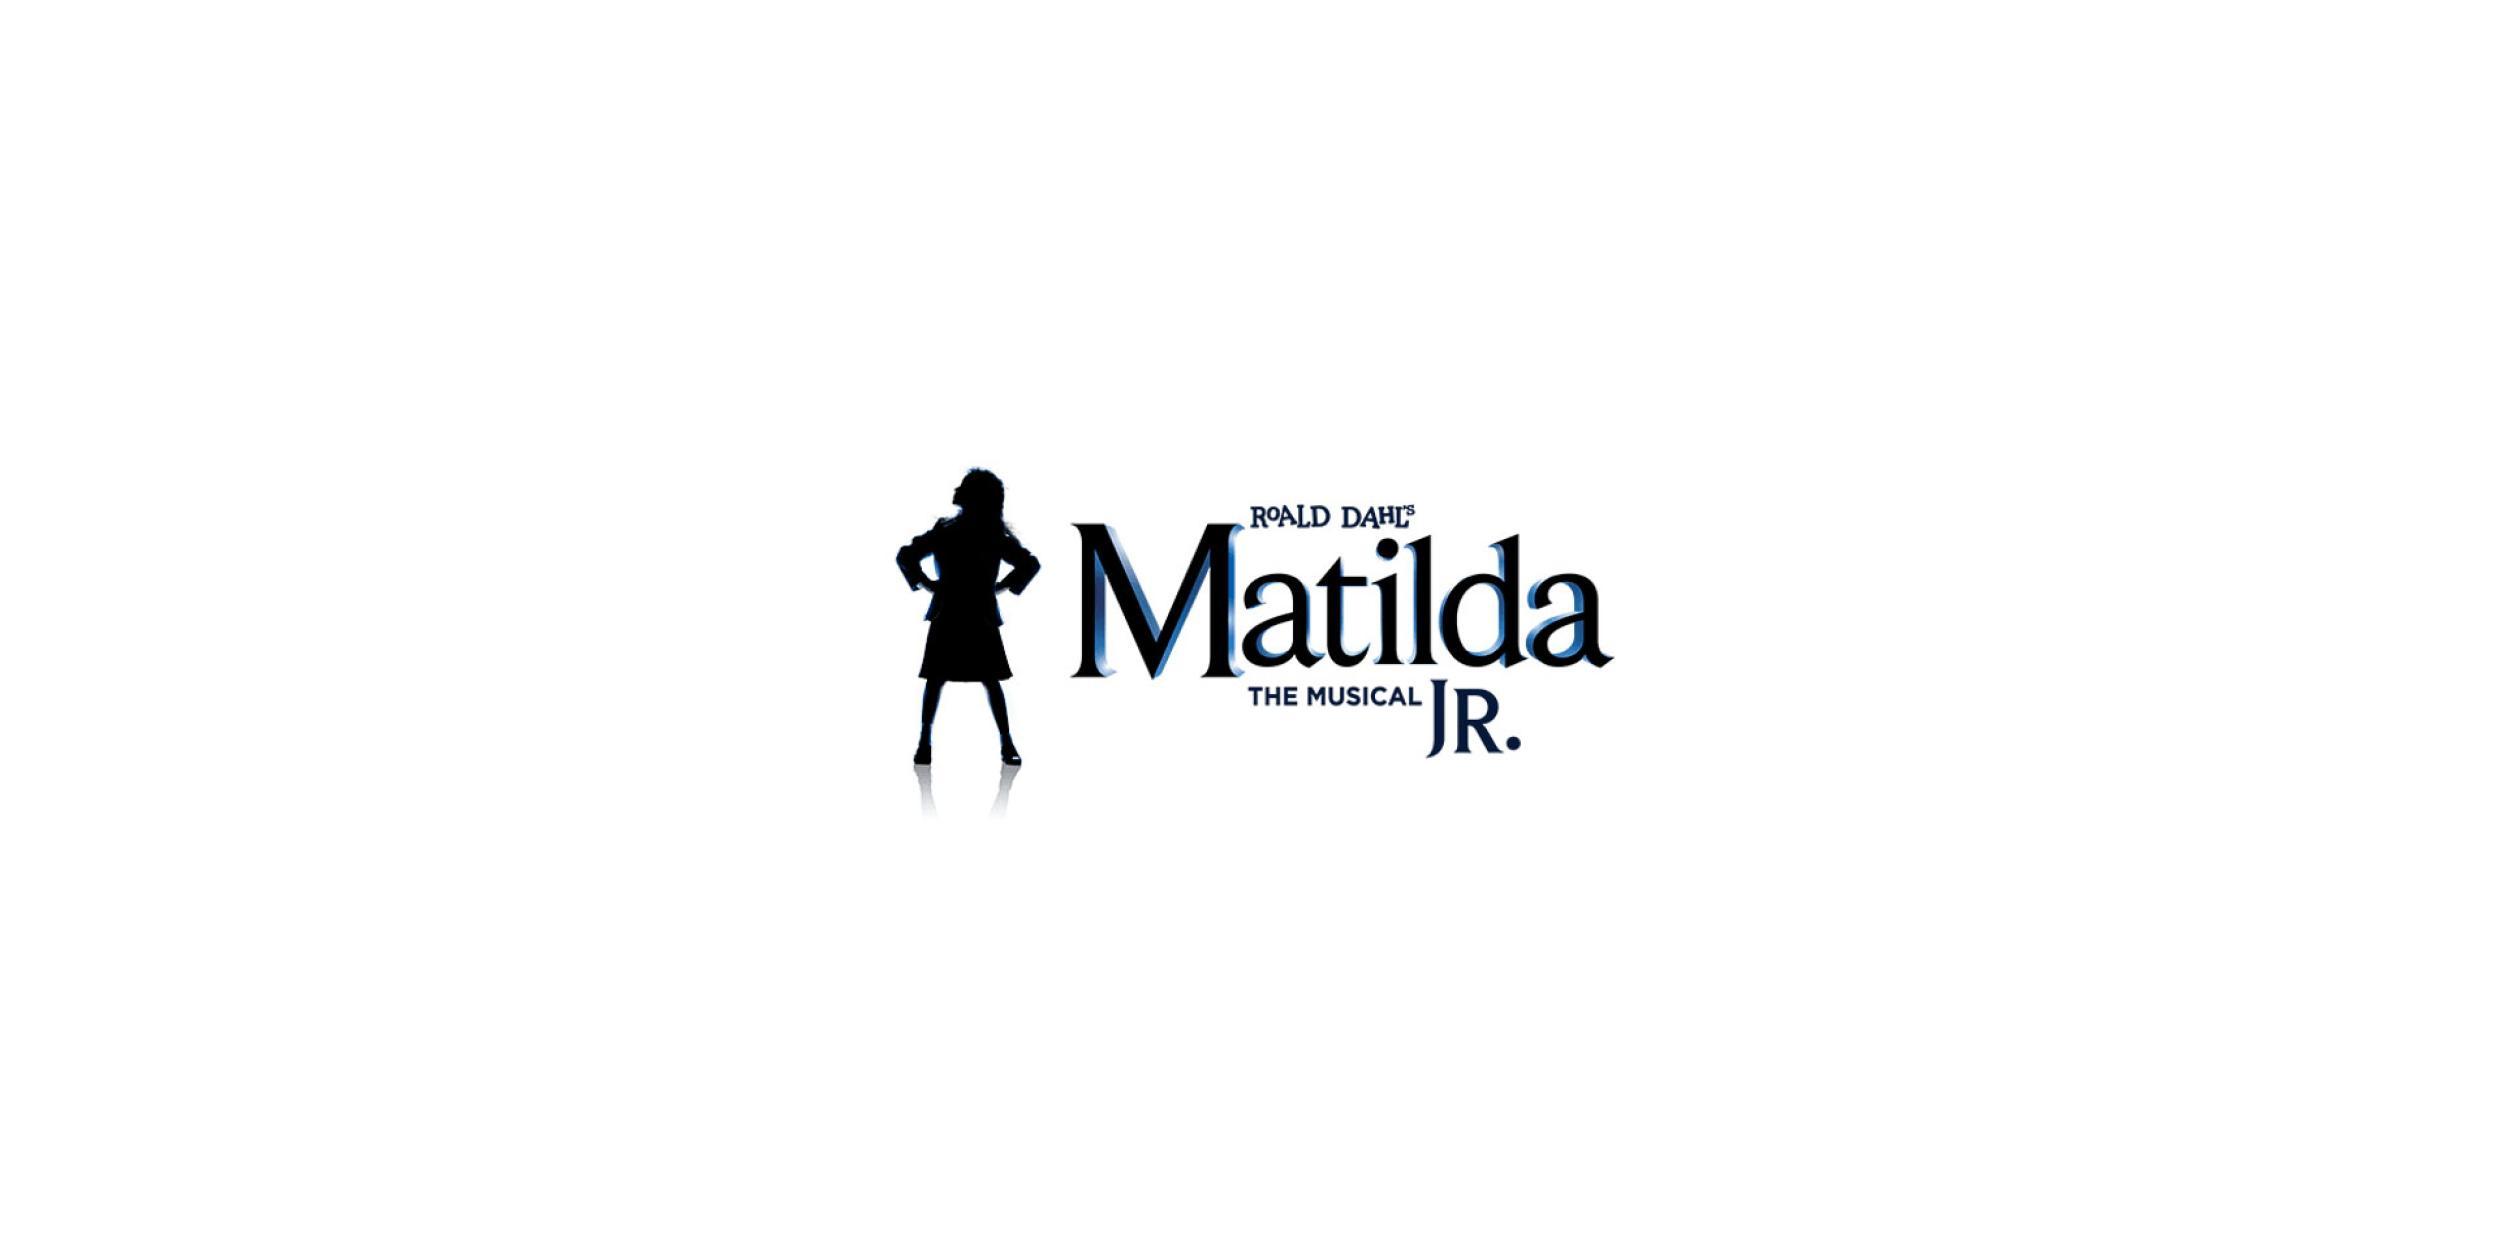 Matilda the Musical JR. logo